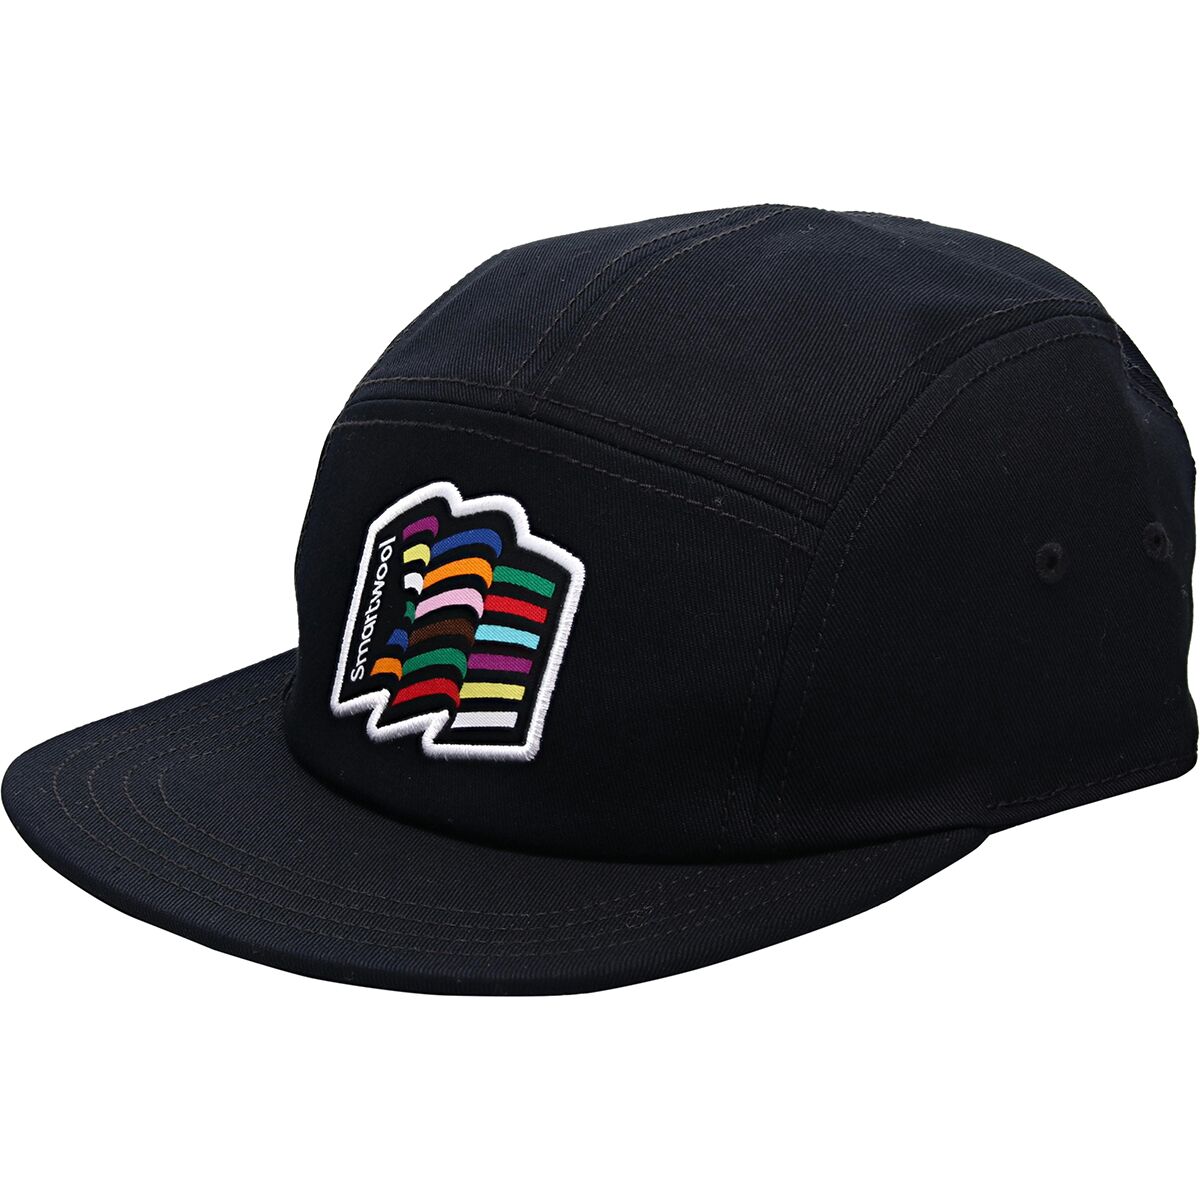 Men's Hats & Caps | Backcountry.com